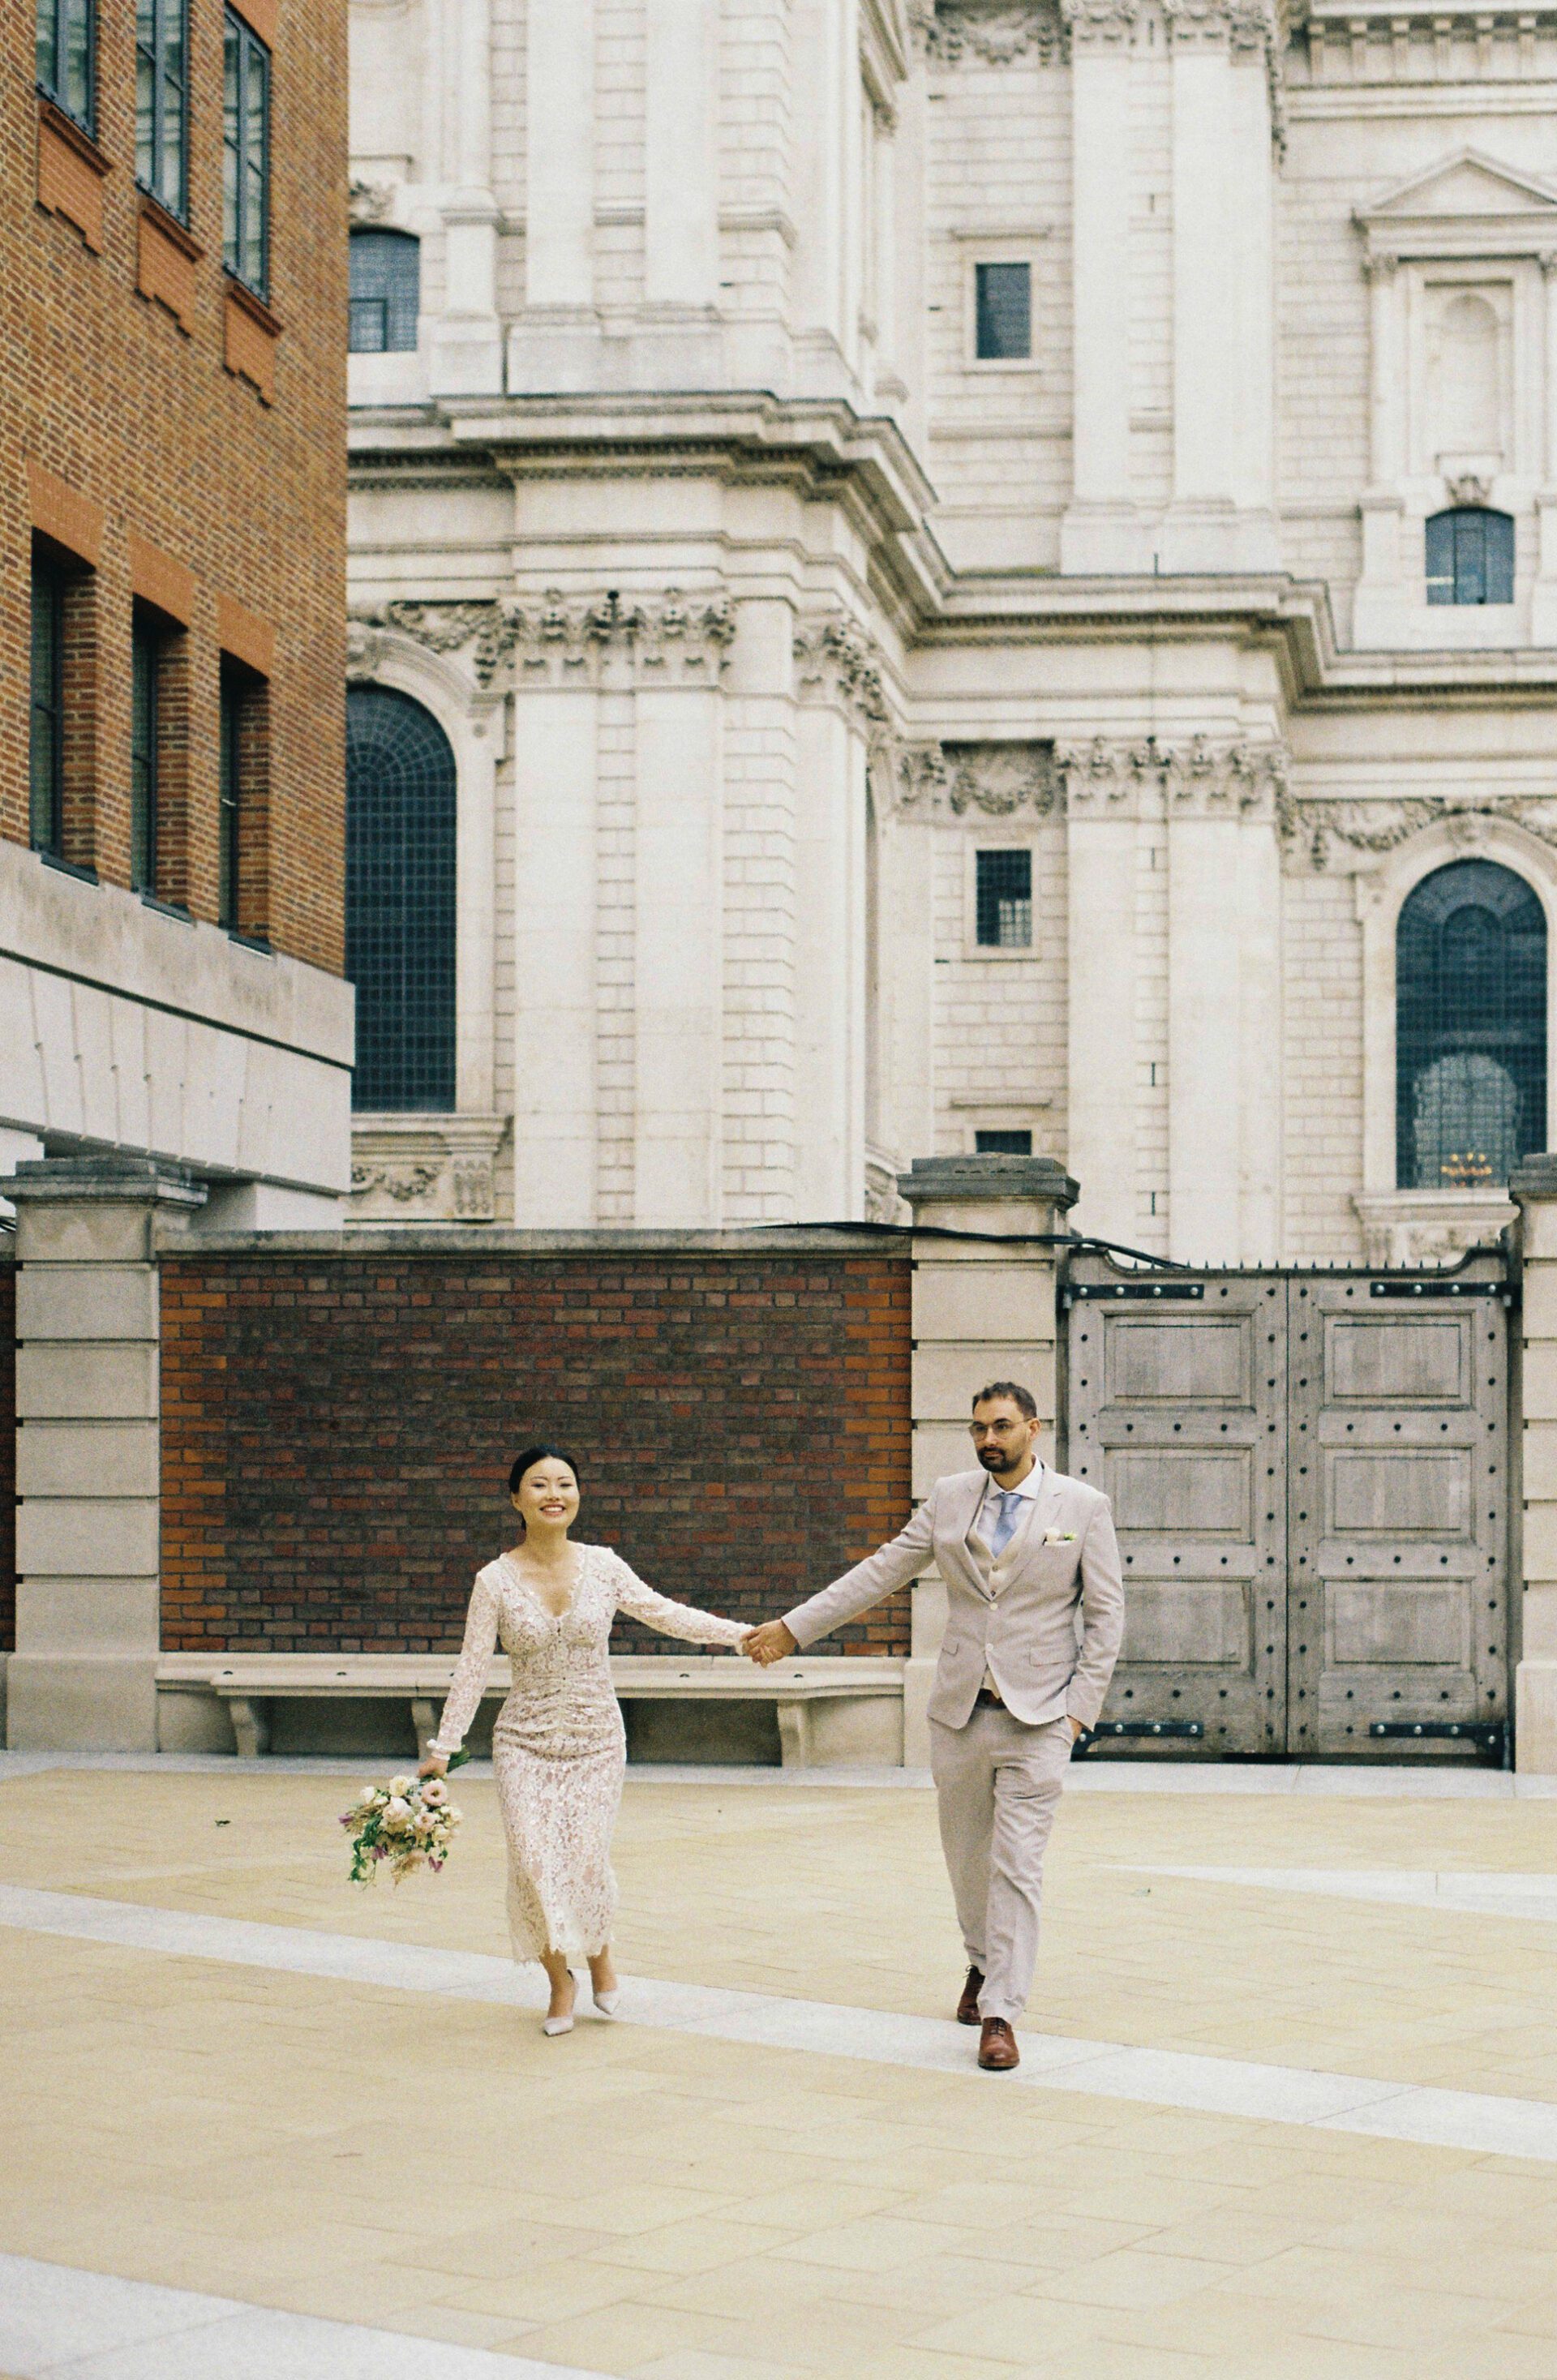 Super 8 London wedding film at Old Marylebone Town Hall